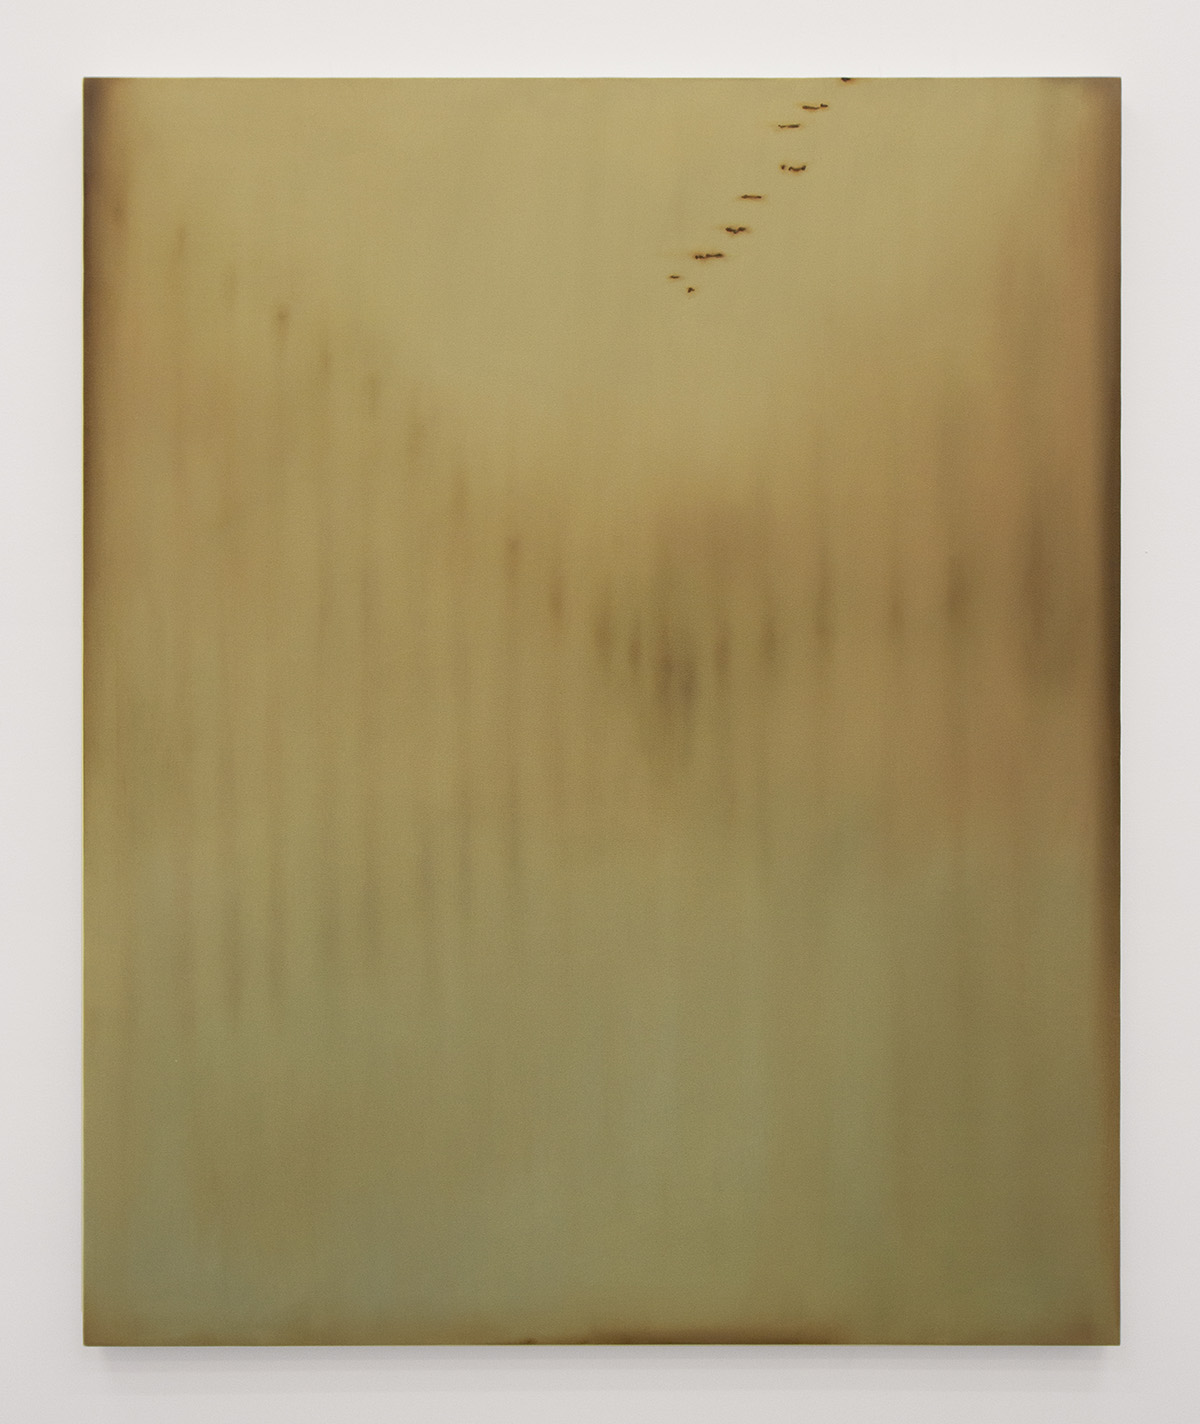 Shi Jiayun, Rust, 2019, oil on canvas, 137.6 x 111.8 cm, 54 1/8 x 44 in.